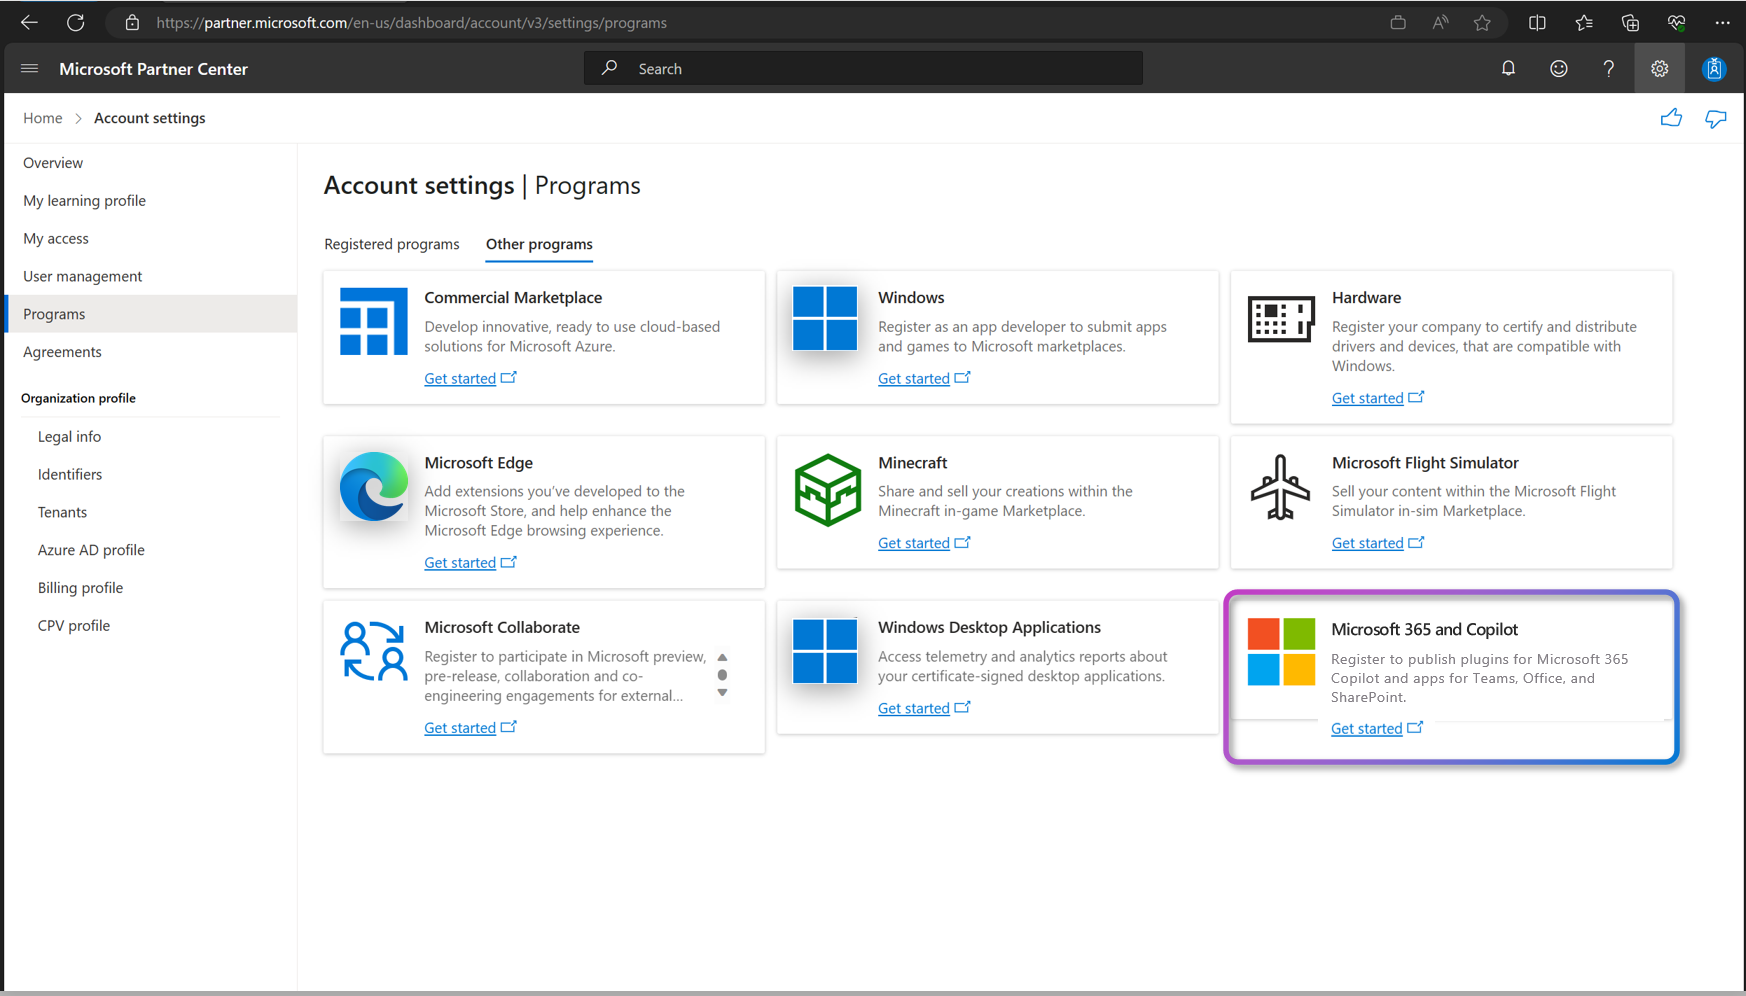 A screenshot of Microsoft 365 and Copilot Partner Center.